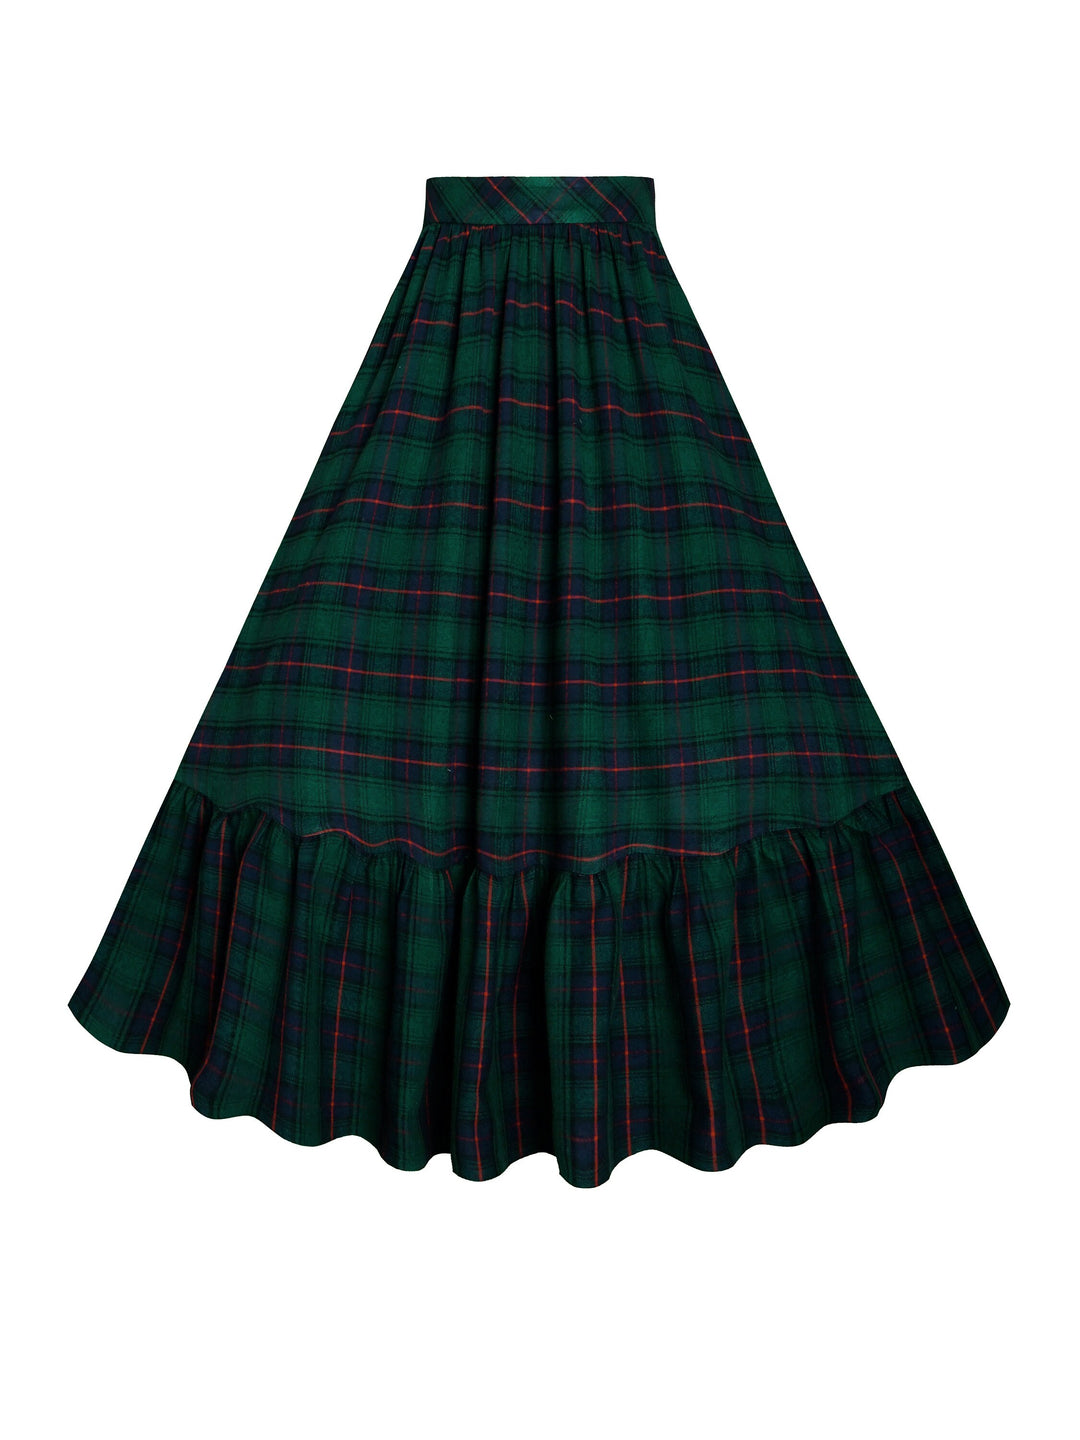 MTO - Rosita Skirt "Princeton Plaid"